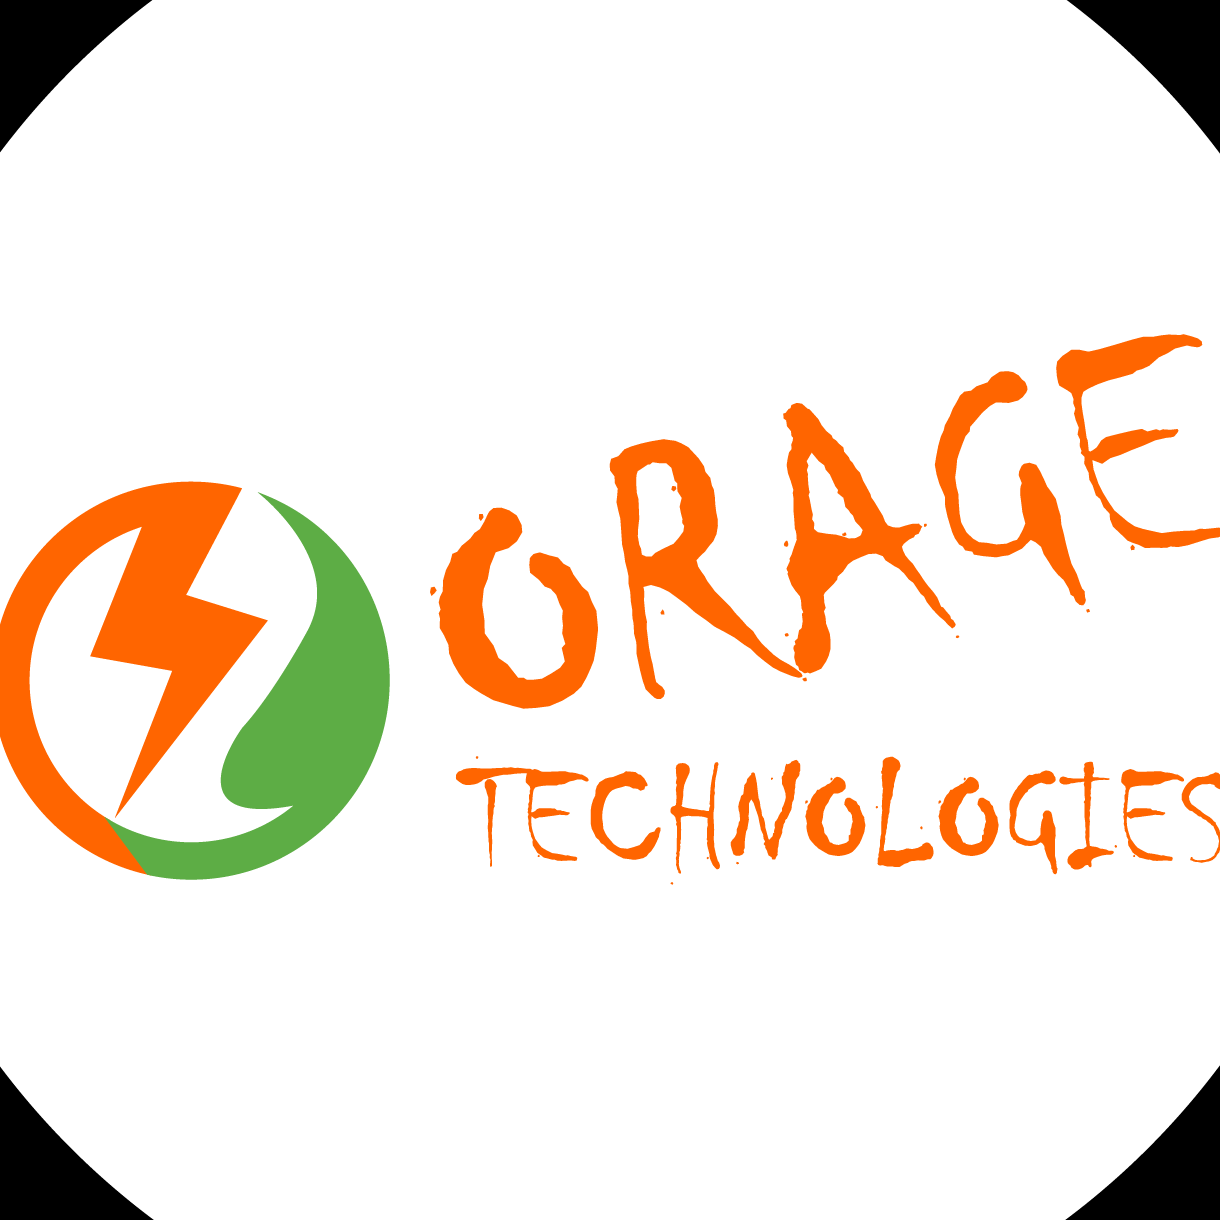 Orage Technologies